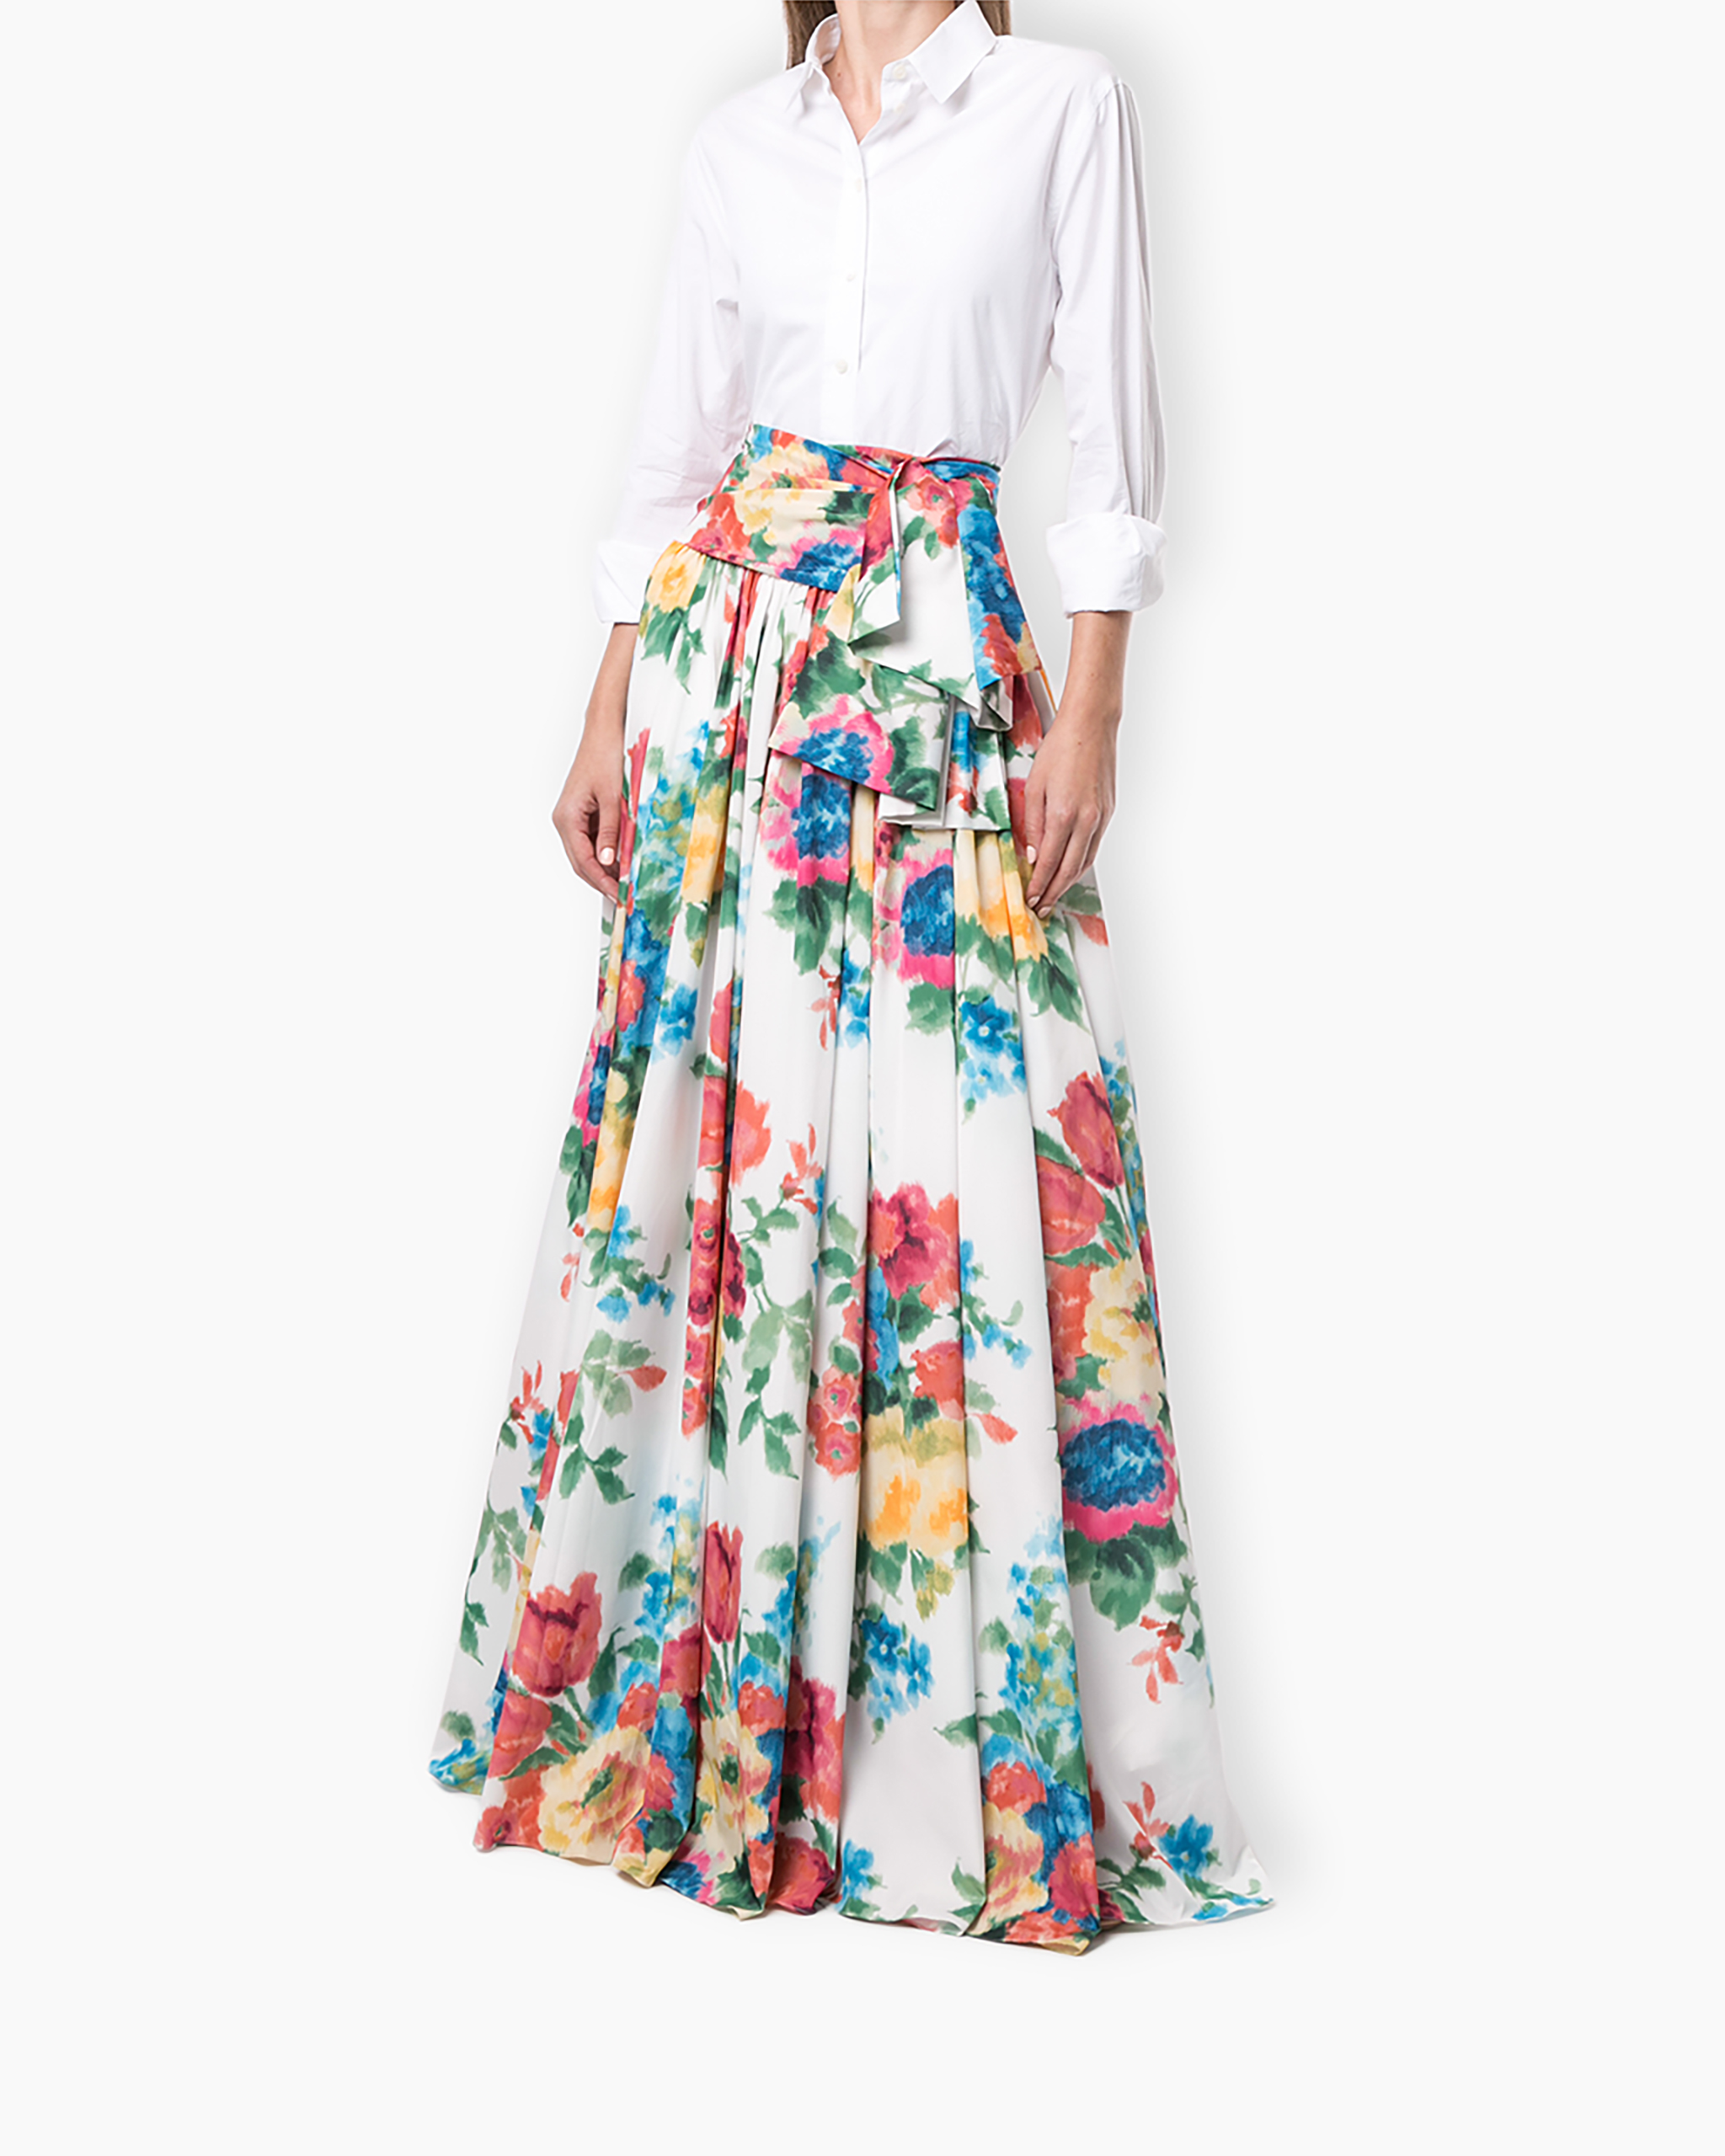 Floral Taffeta Ball Skirt